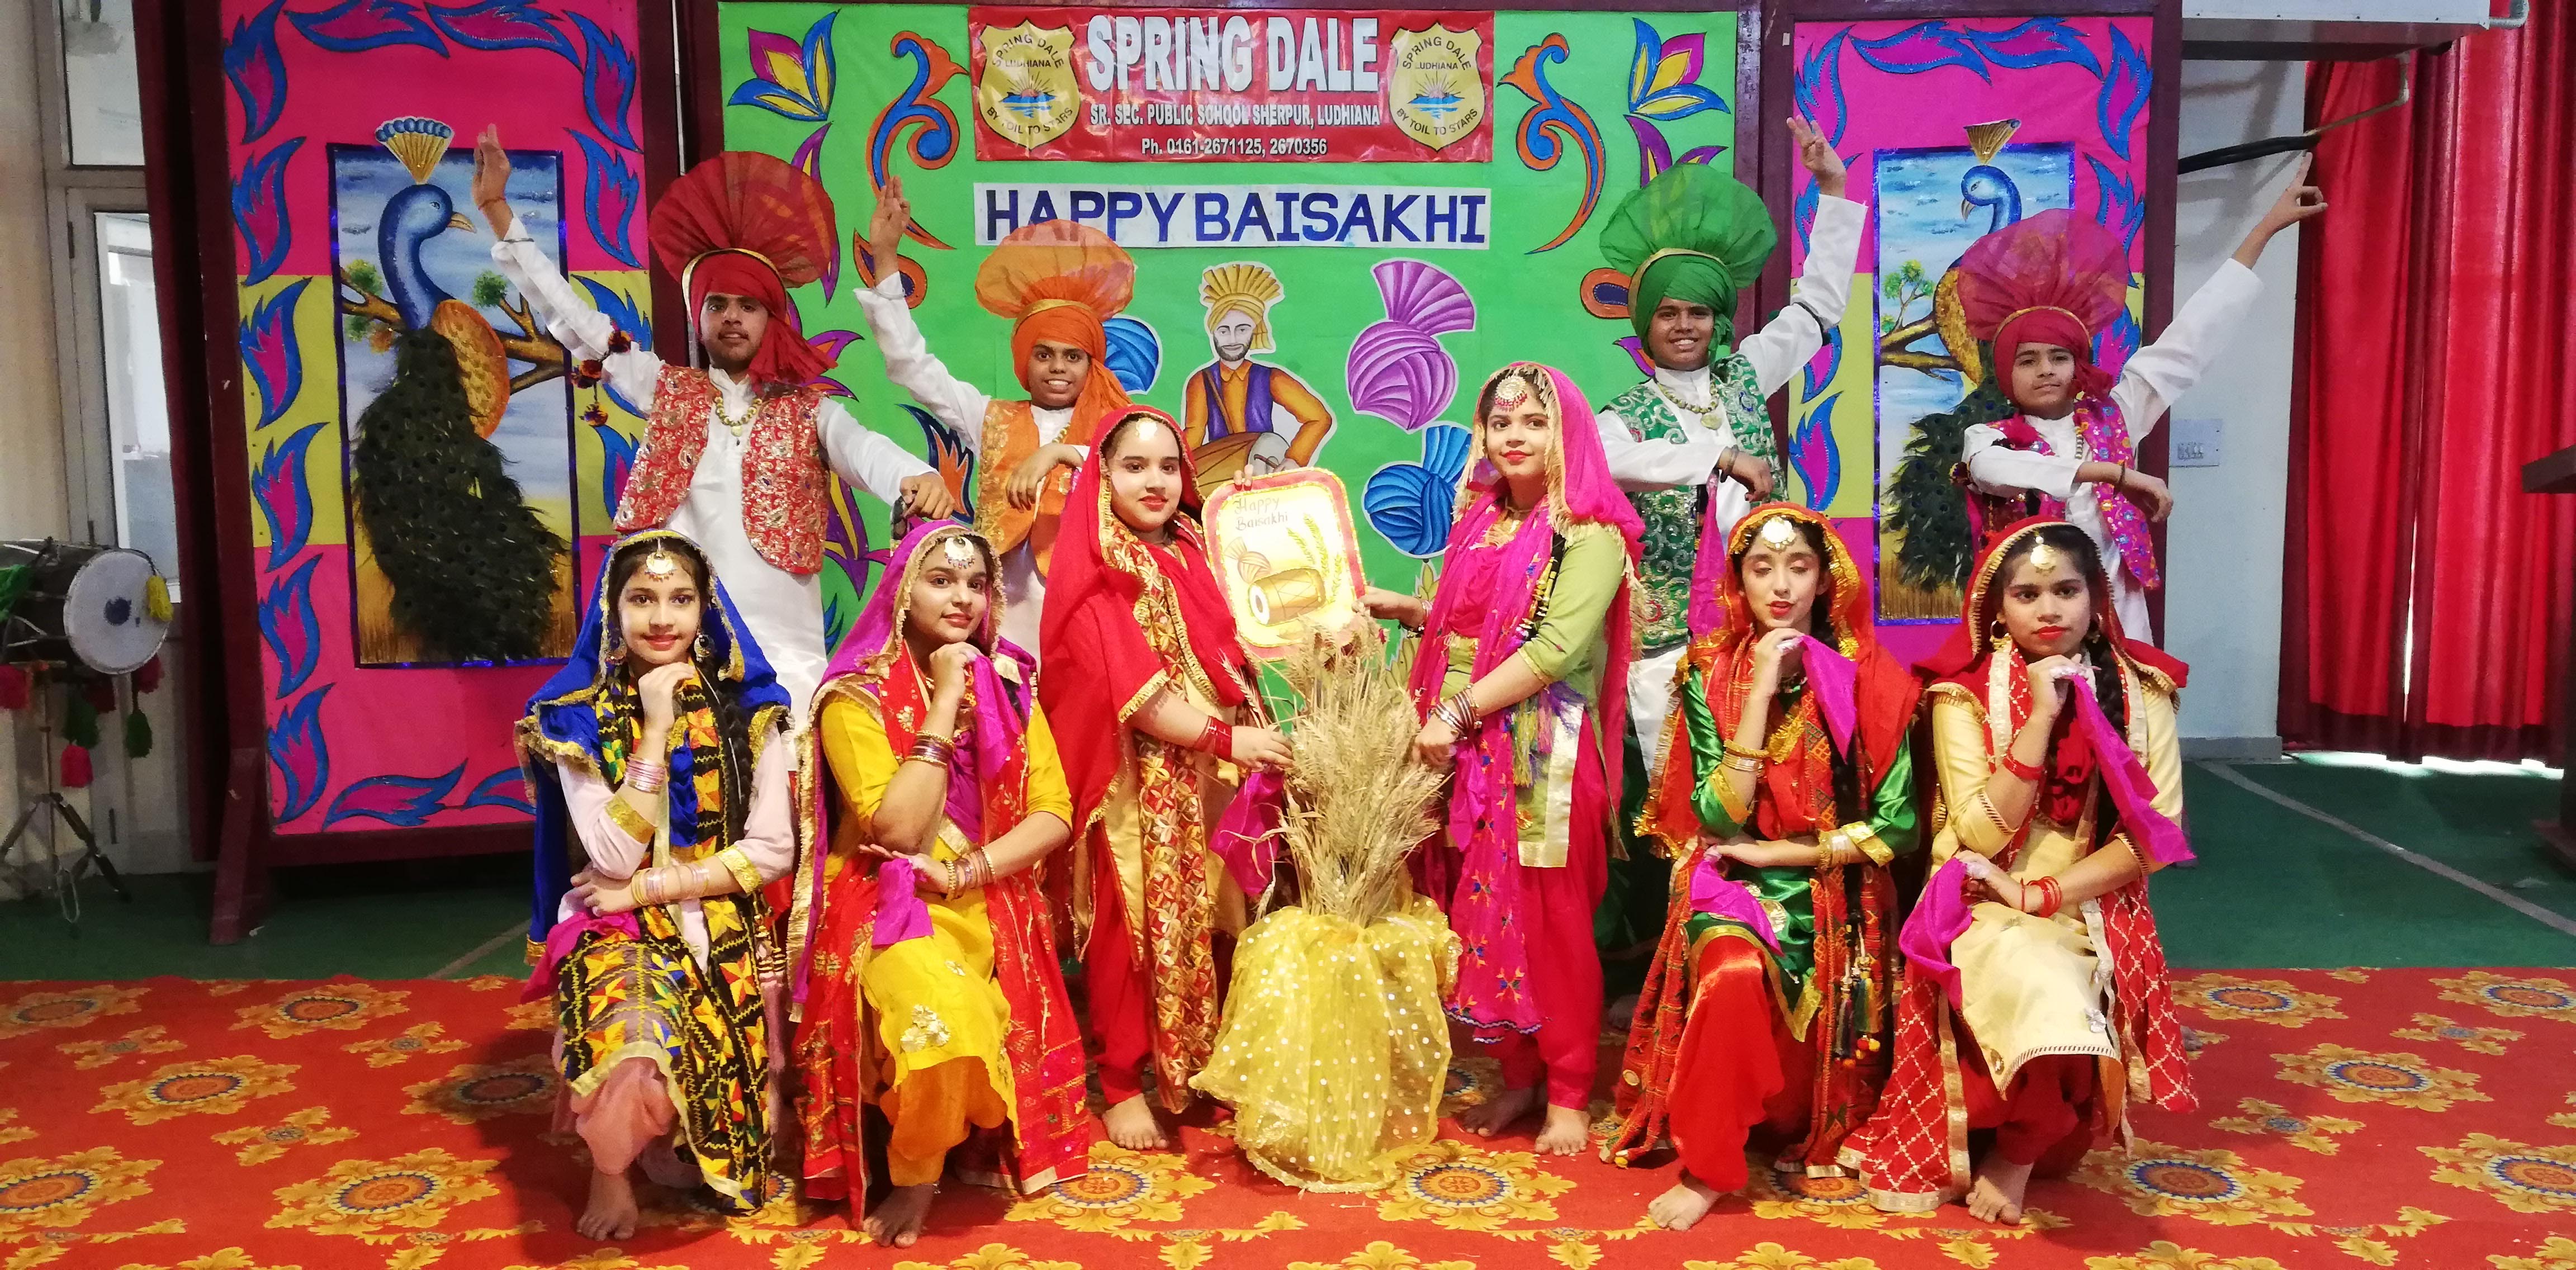 Spring Dale Play School celebrates Baisakhi